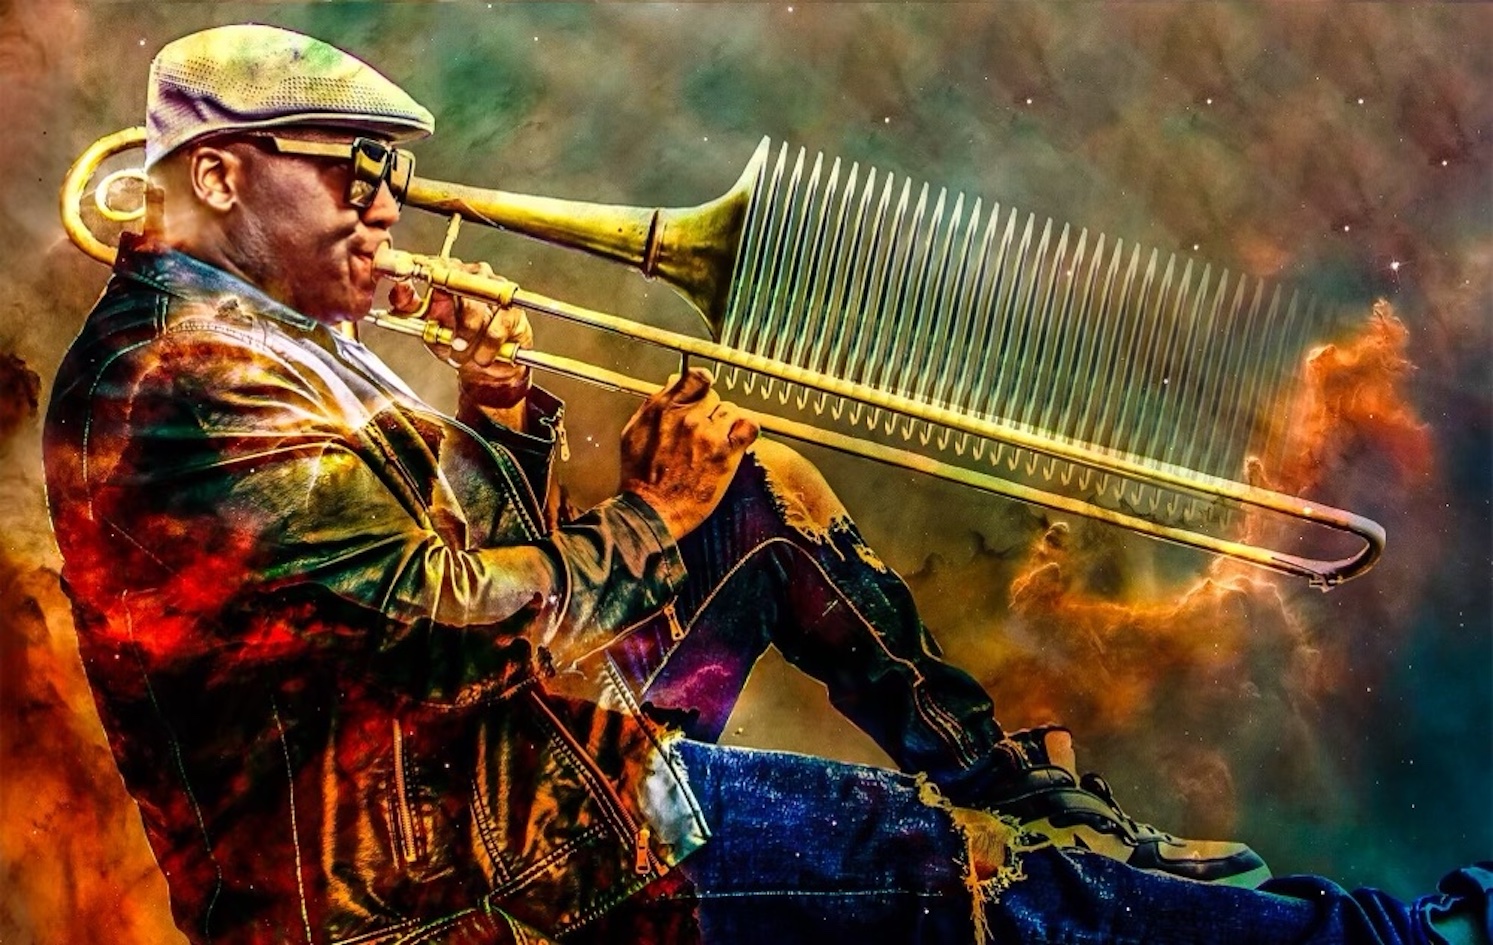 Big Sam Playing his Trombone